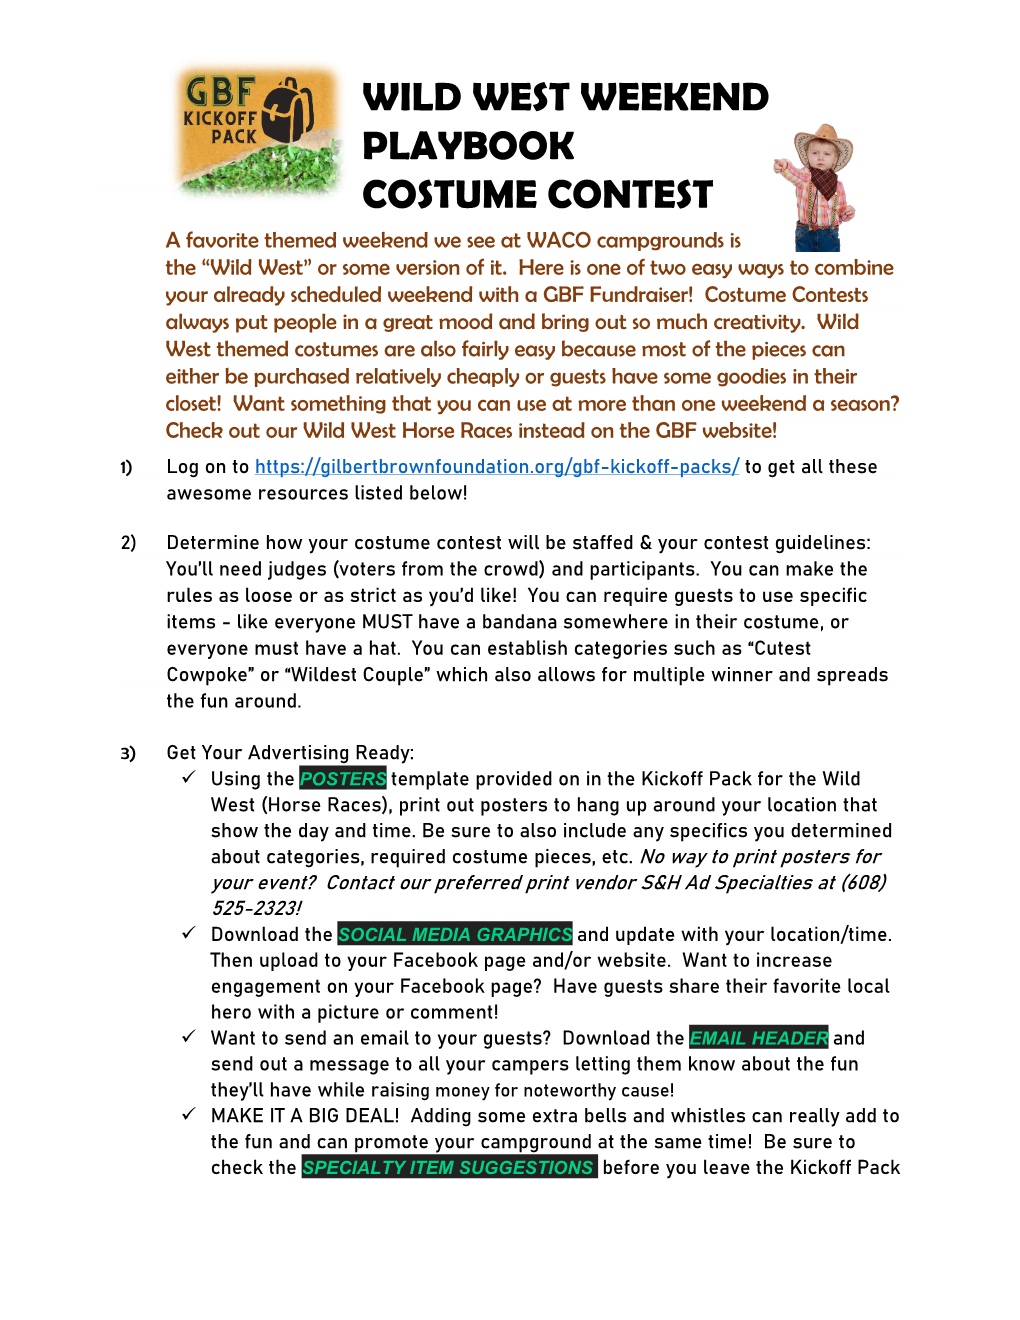 Wild West Weekend Playbook Costume Contest